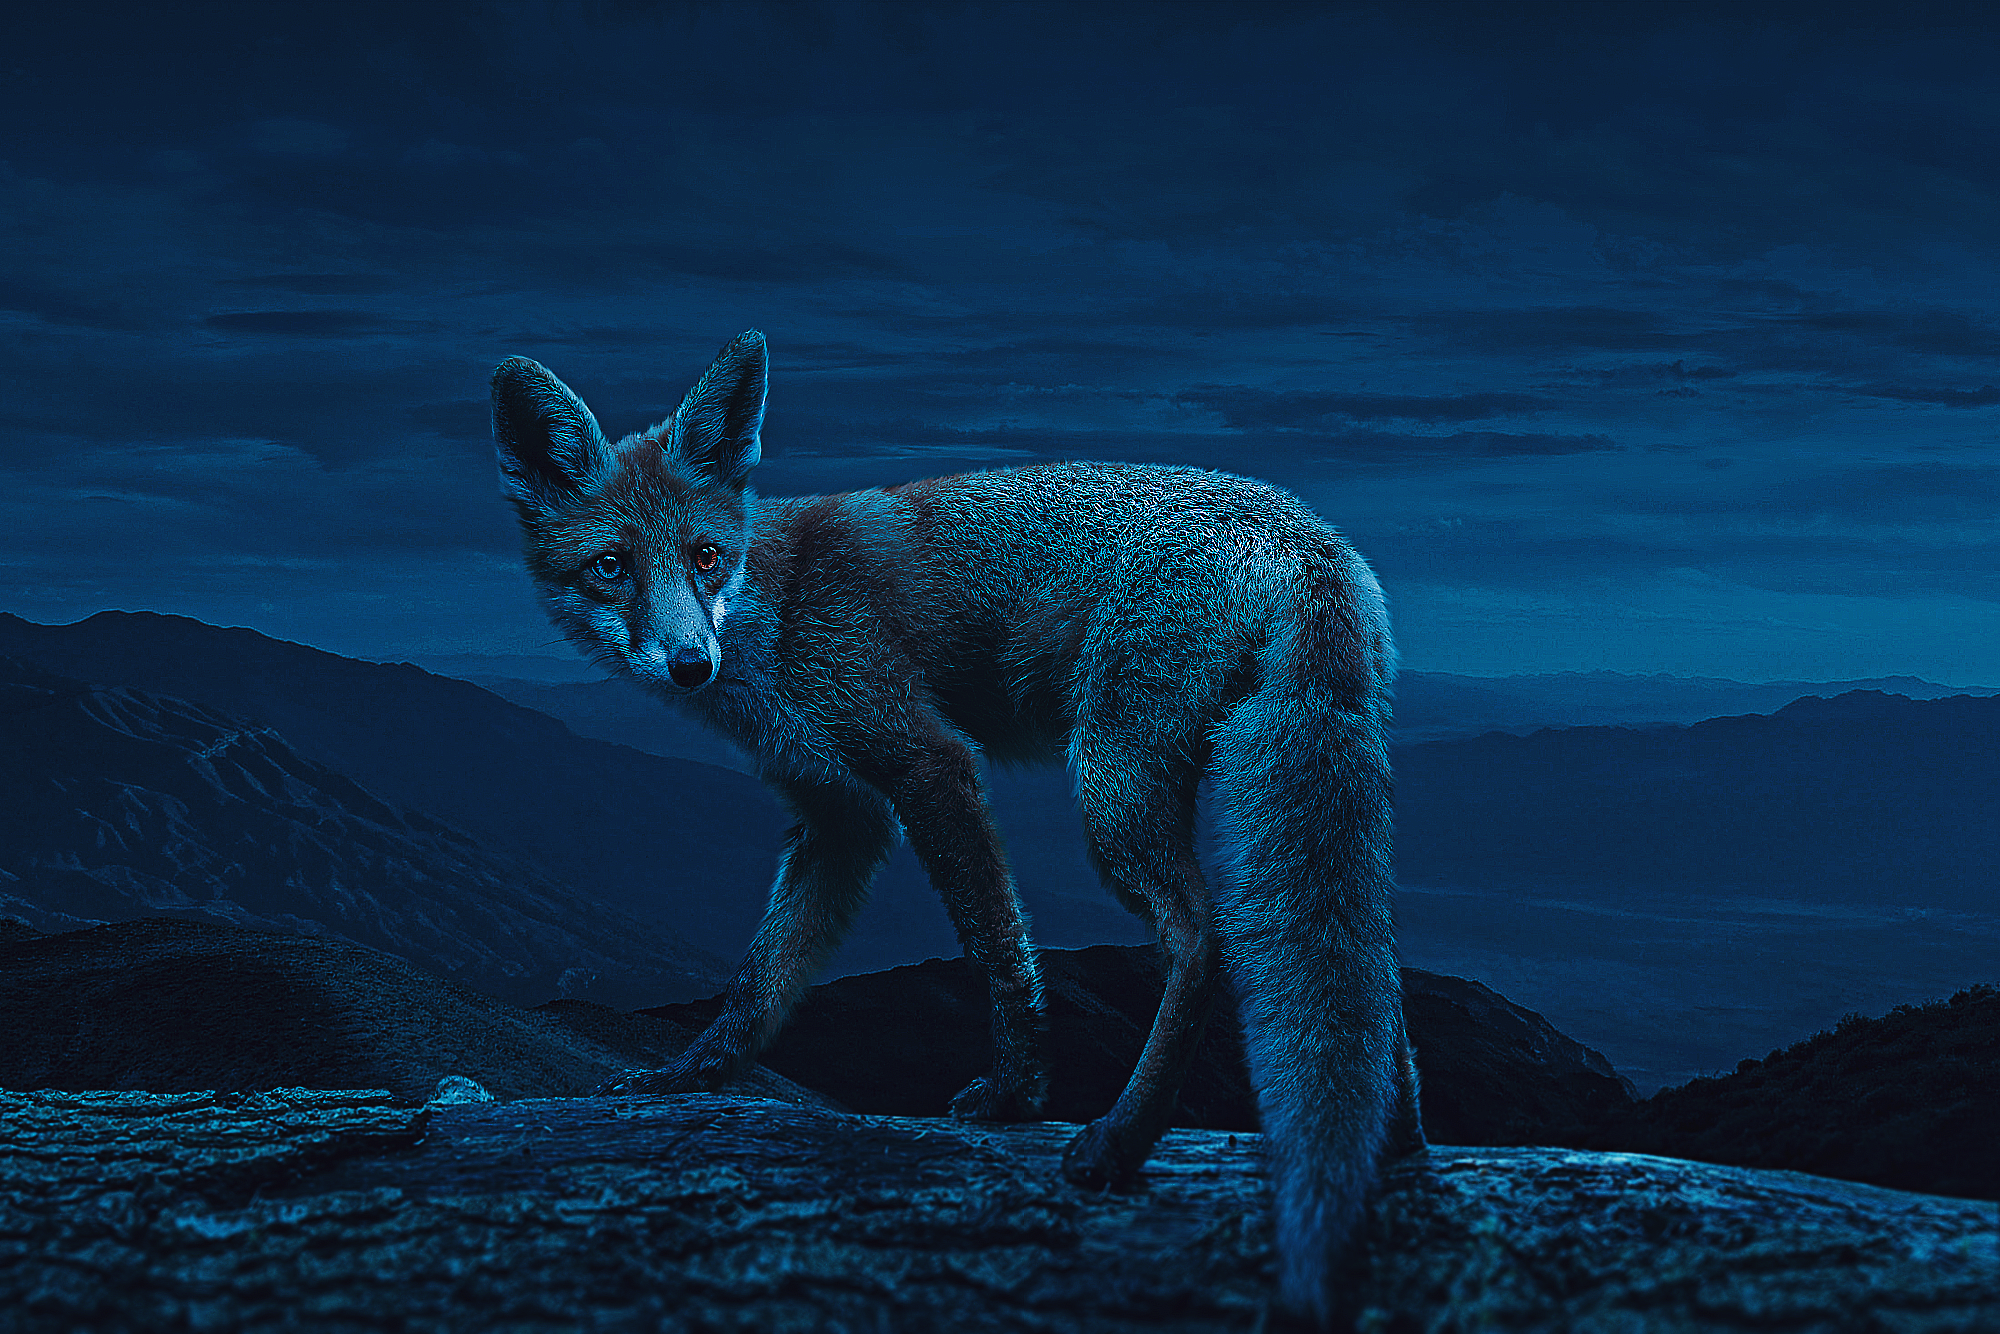 General 2000x1334 fox animals night photoshopped nature